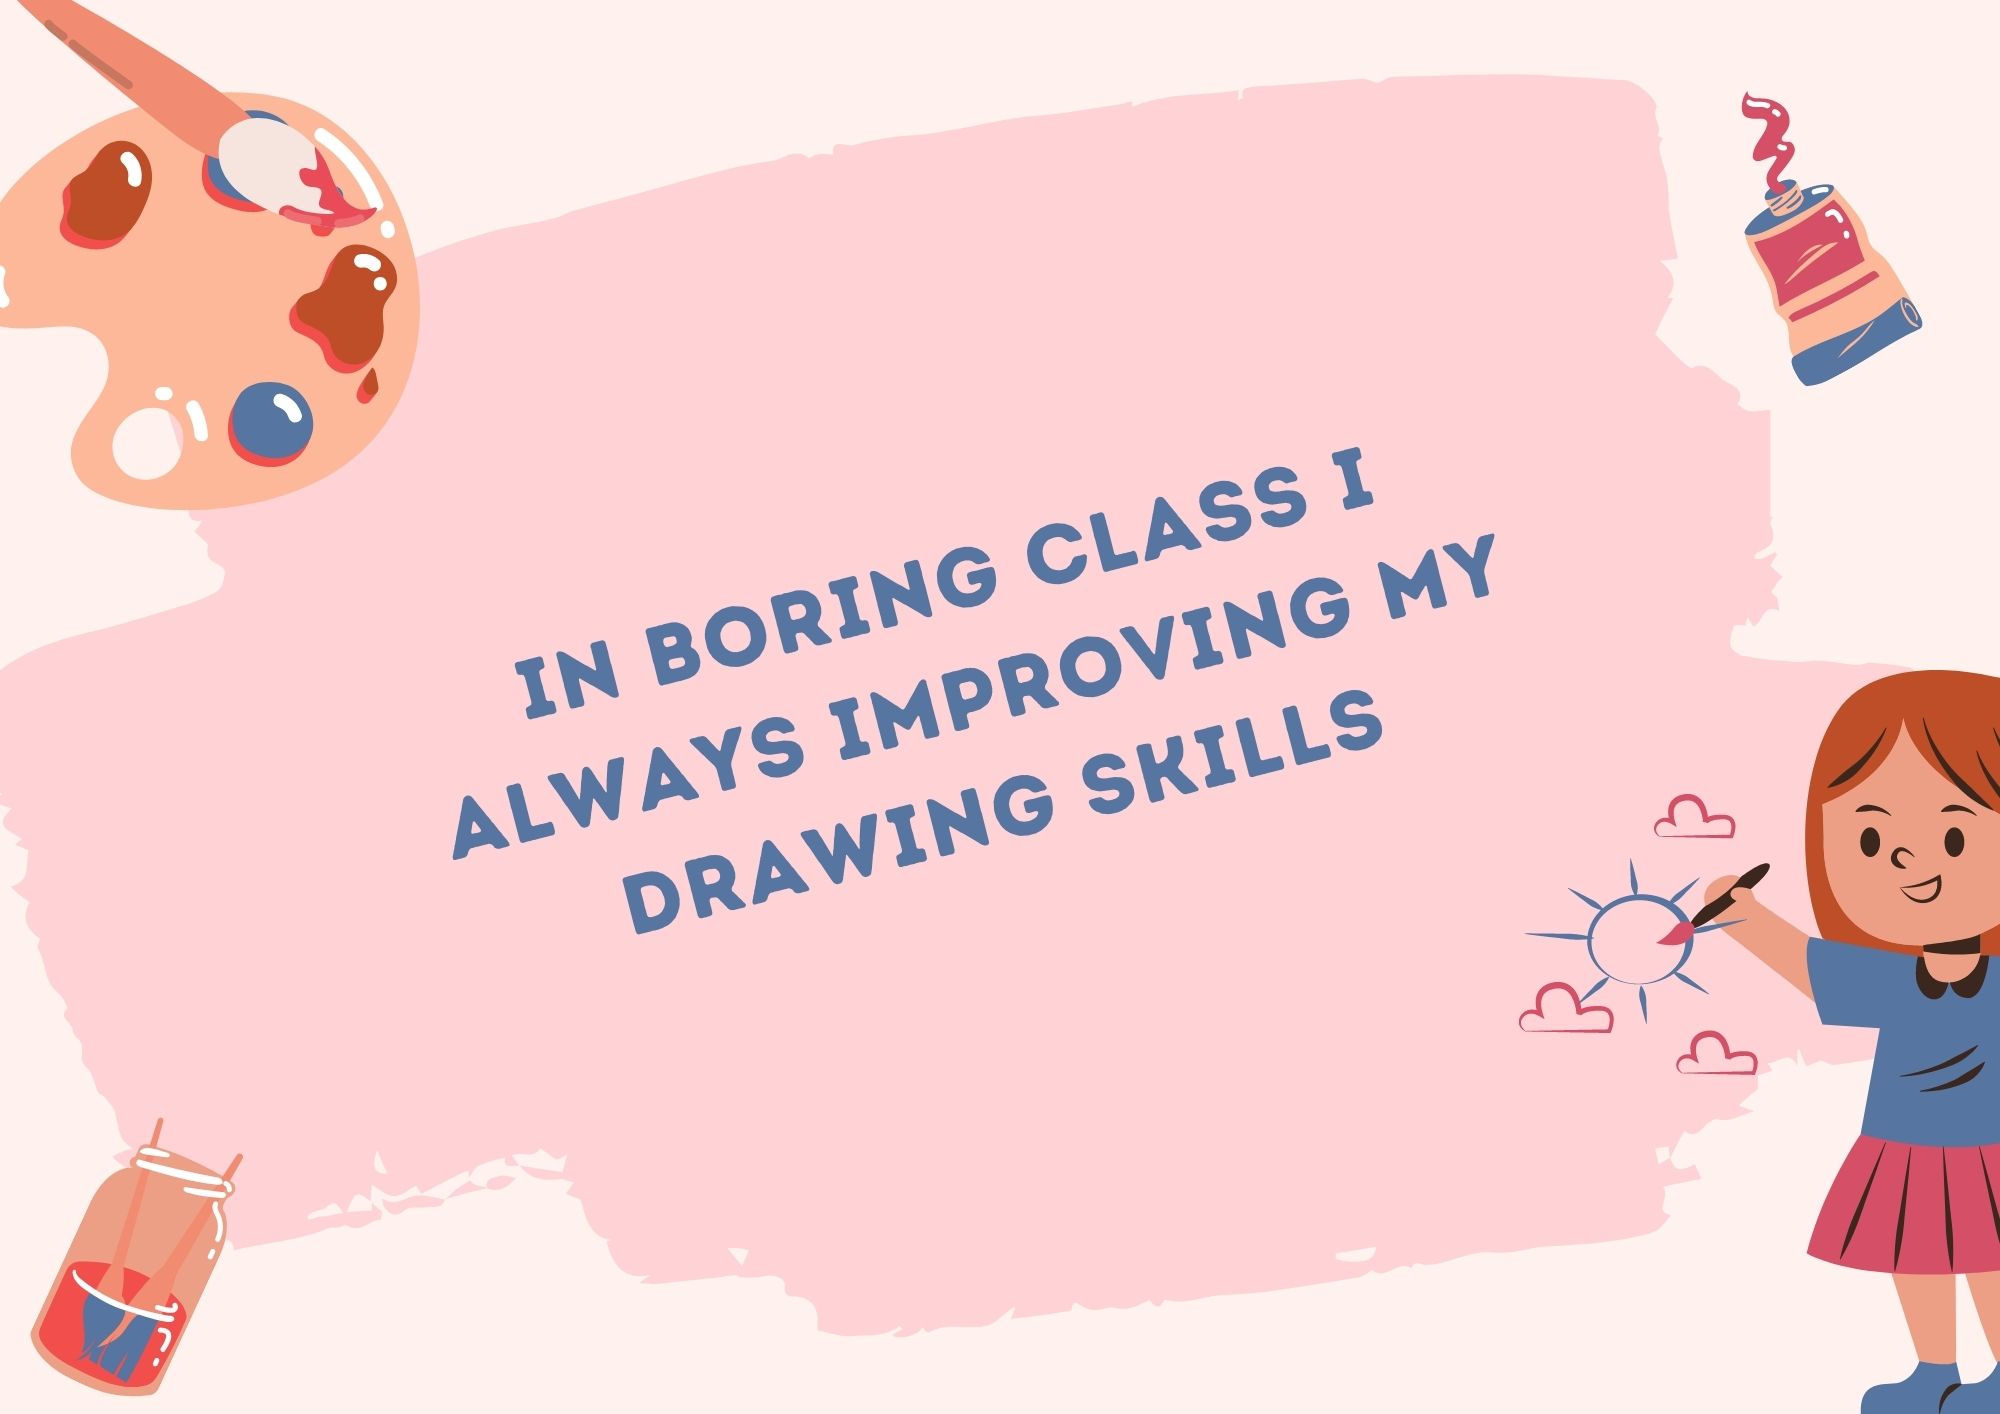 In boring class I always improving my drawing skills